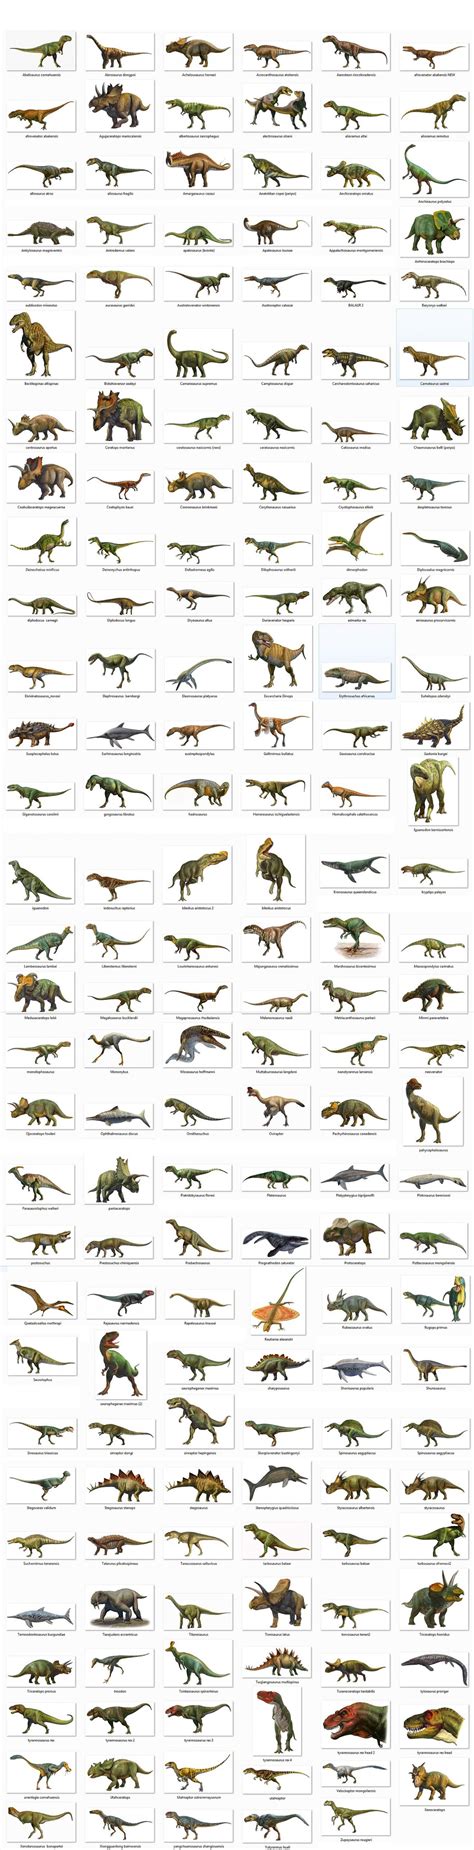 Dinosaurs Size Comparison Charts Pixelsham Dinosaur Animation | Images and Photos finder